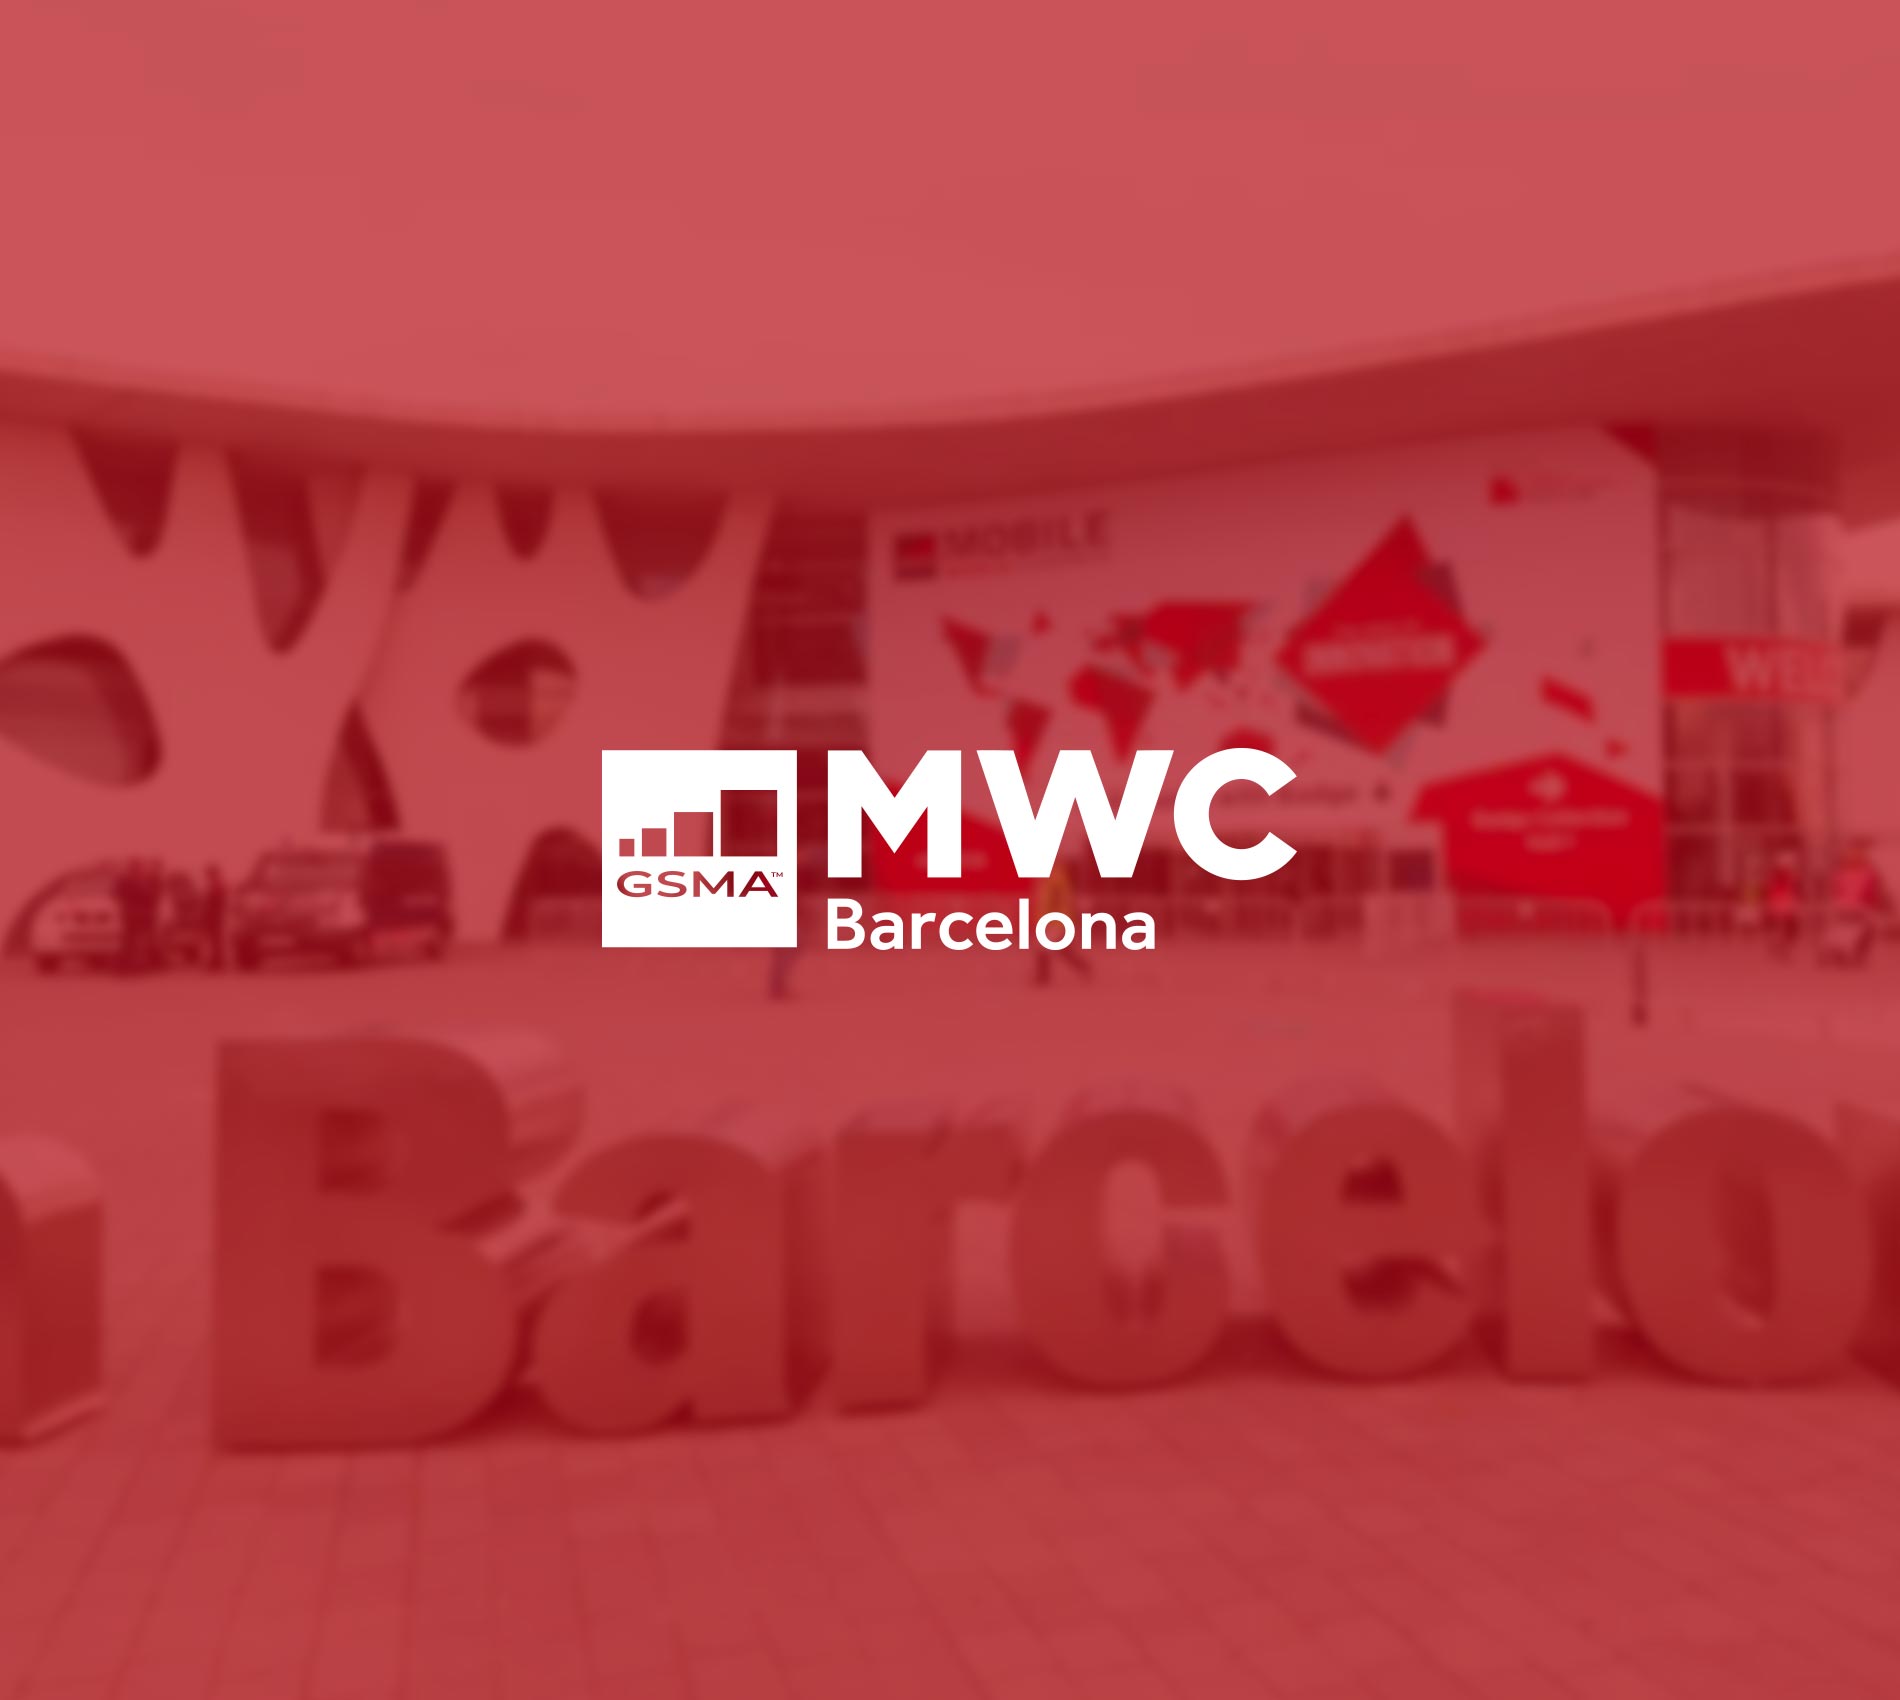 Mobile World Congress 2015, Barcelona | Março 2015